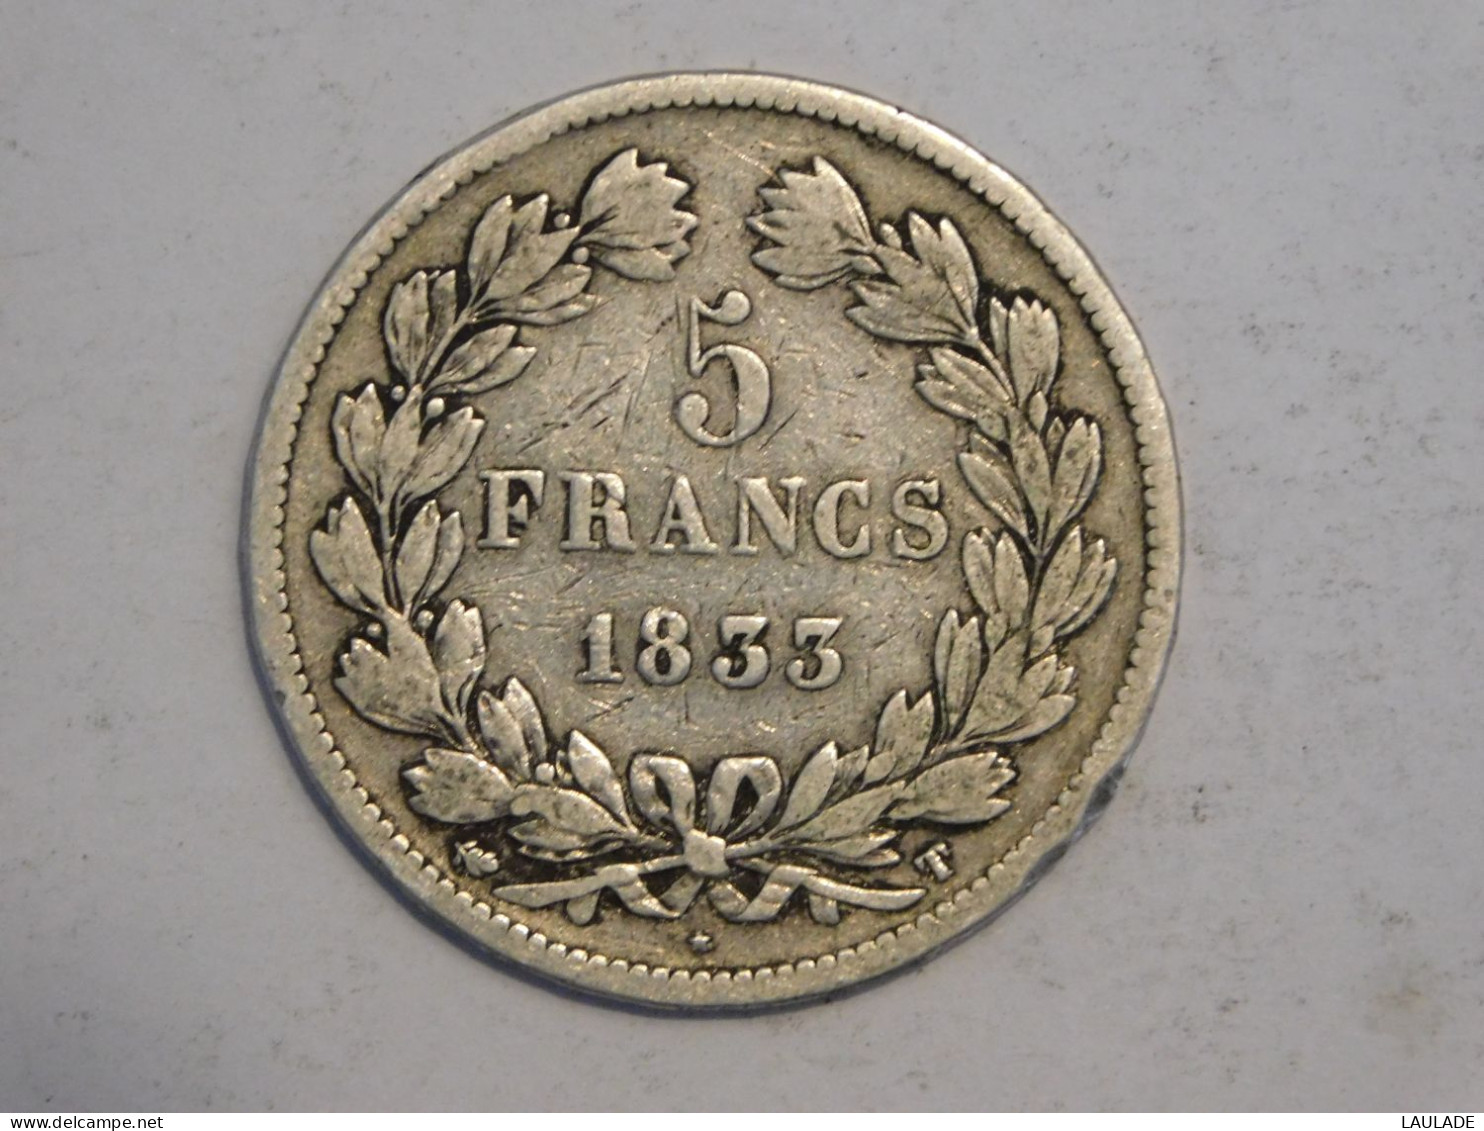 FRANCE 5 Francs 1833 T - Silver, Argent Franc - 5 Francs